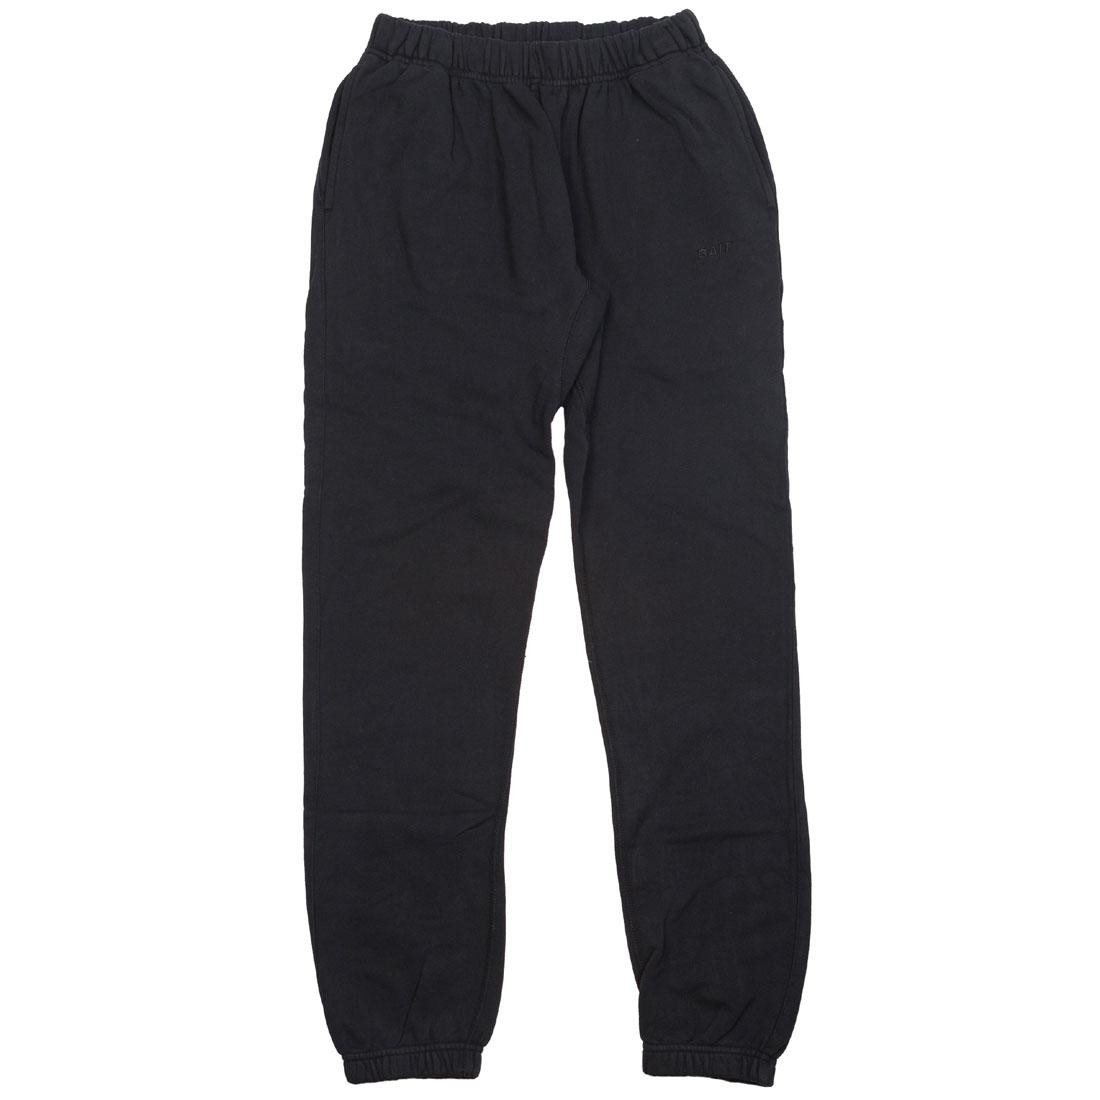 BAIT Men Premium Core Sweatpants black jetset